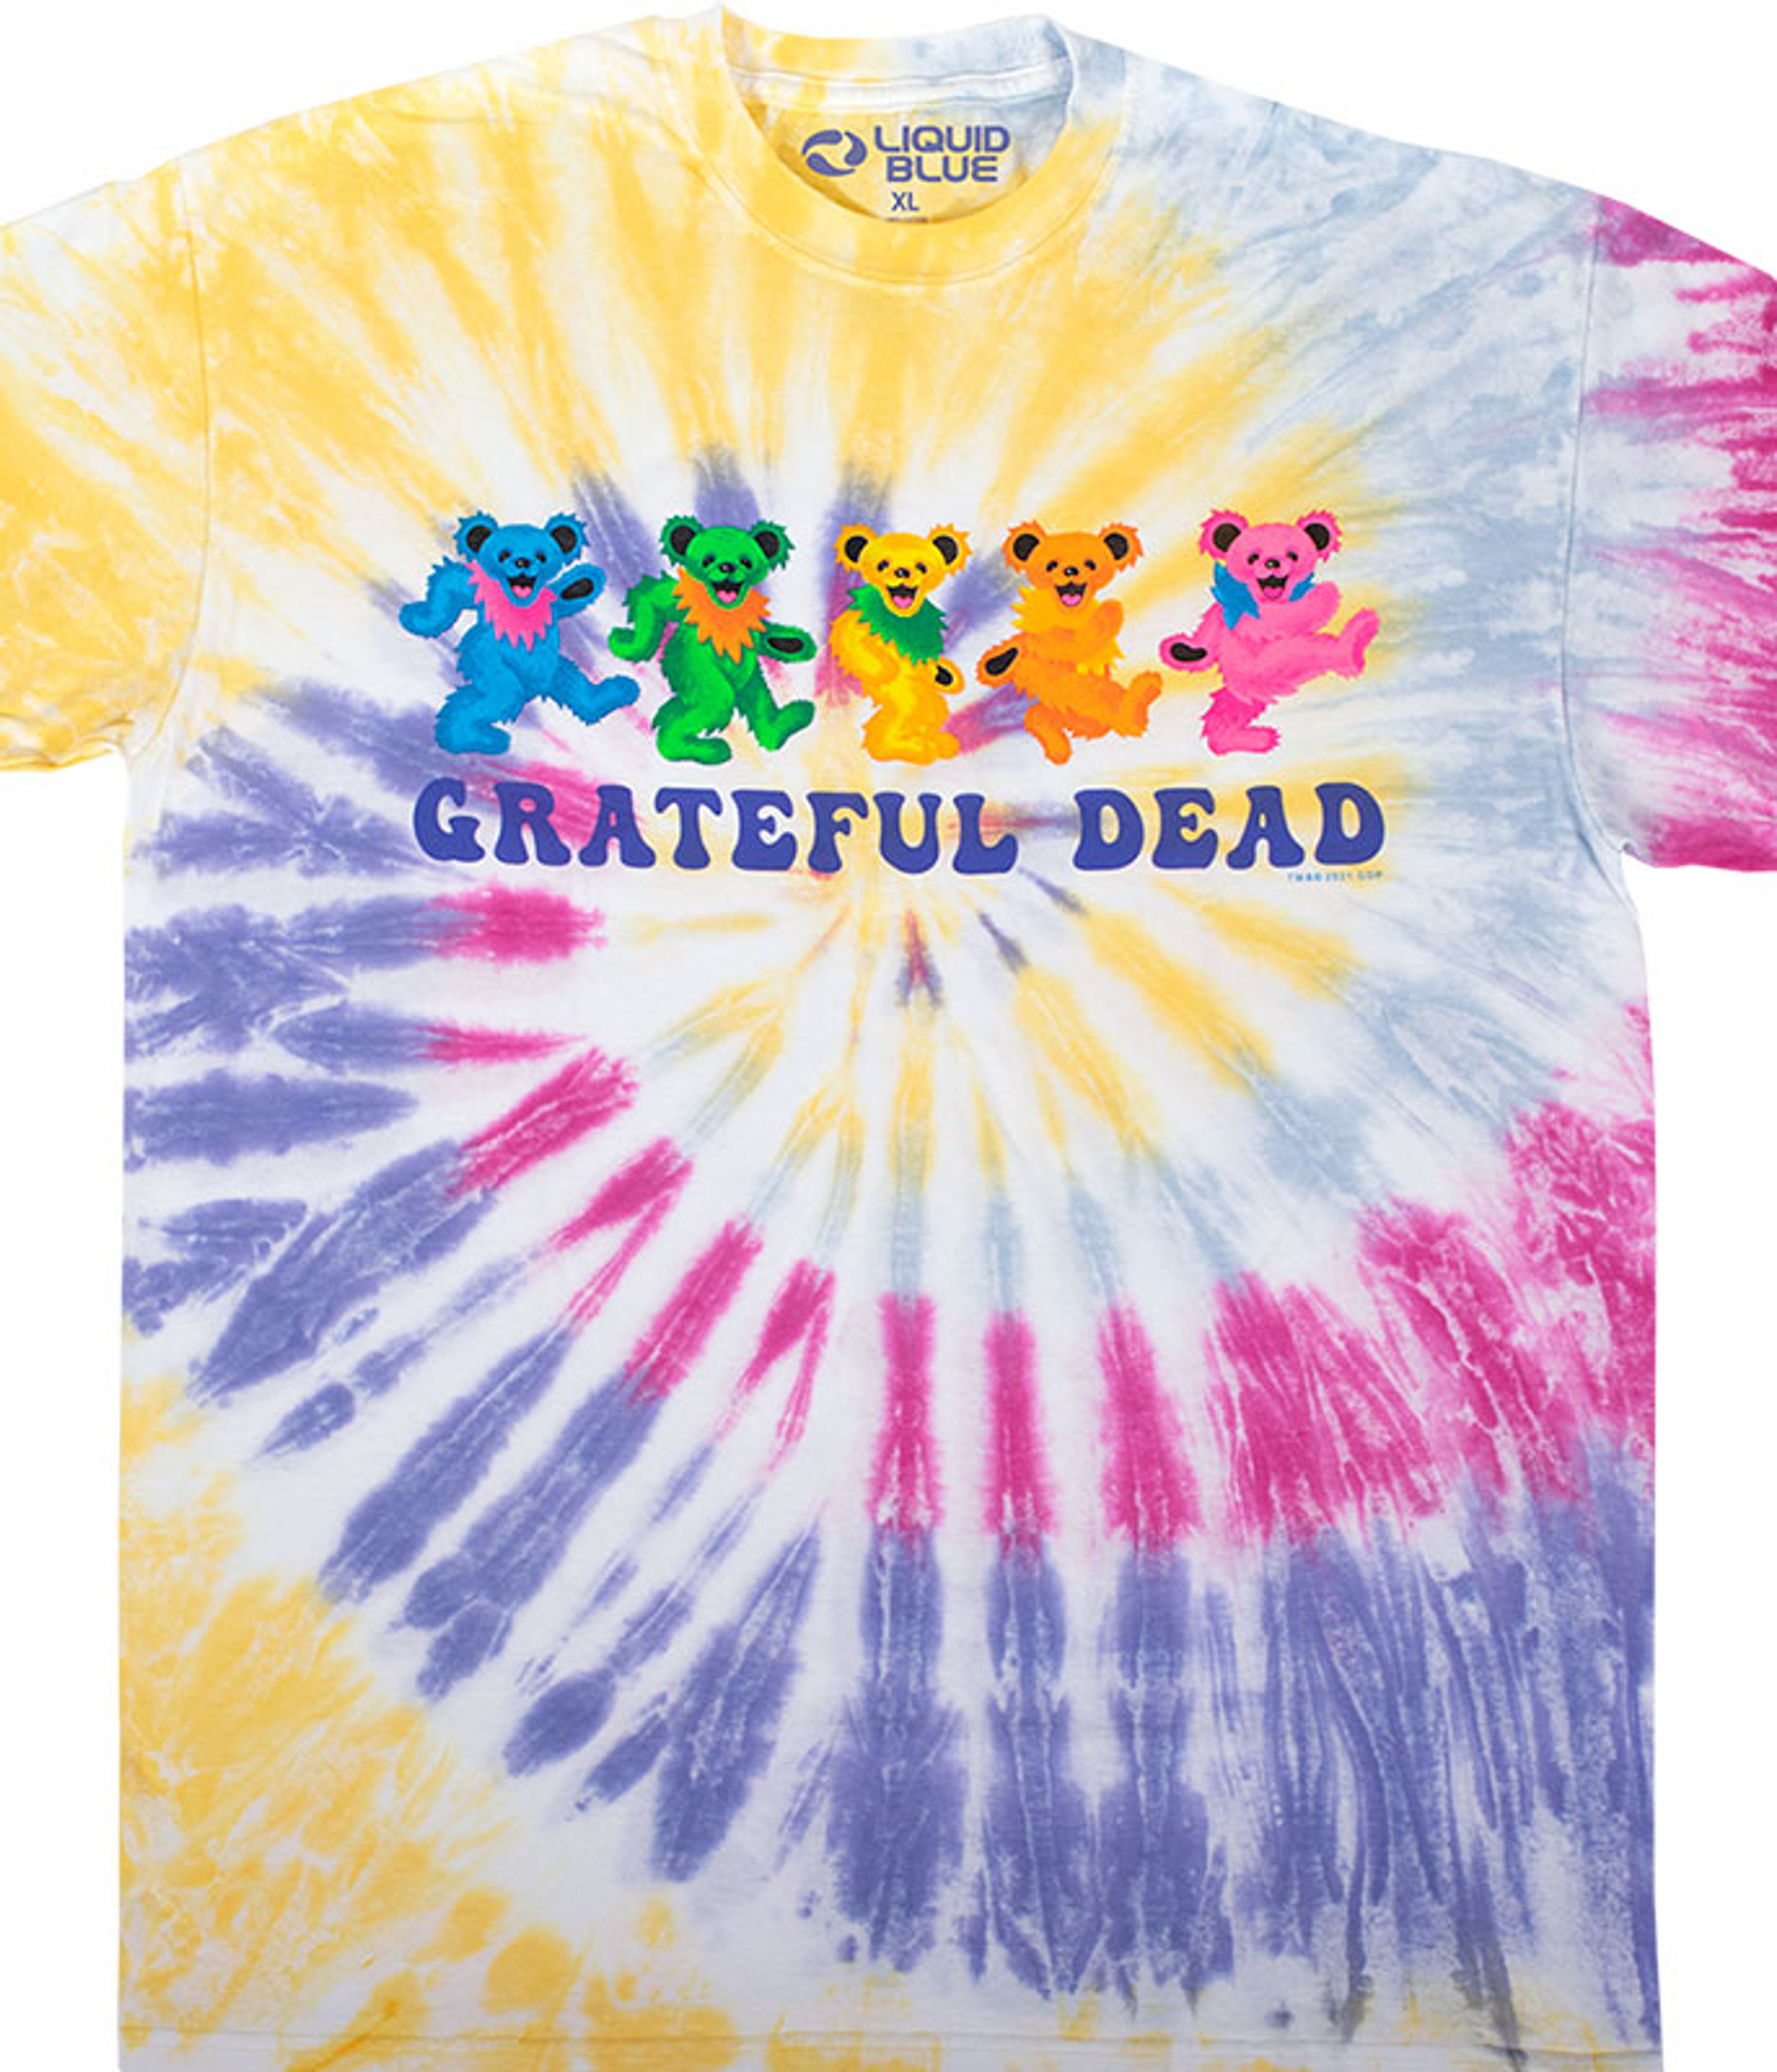 Grateful Dead Dancing Bears Rock Tie Dye Band Colorful Music Mens T Shirt S-2xl - M